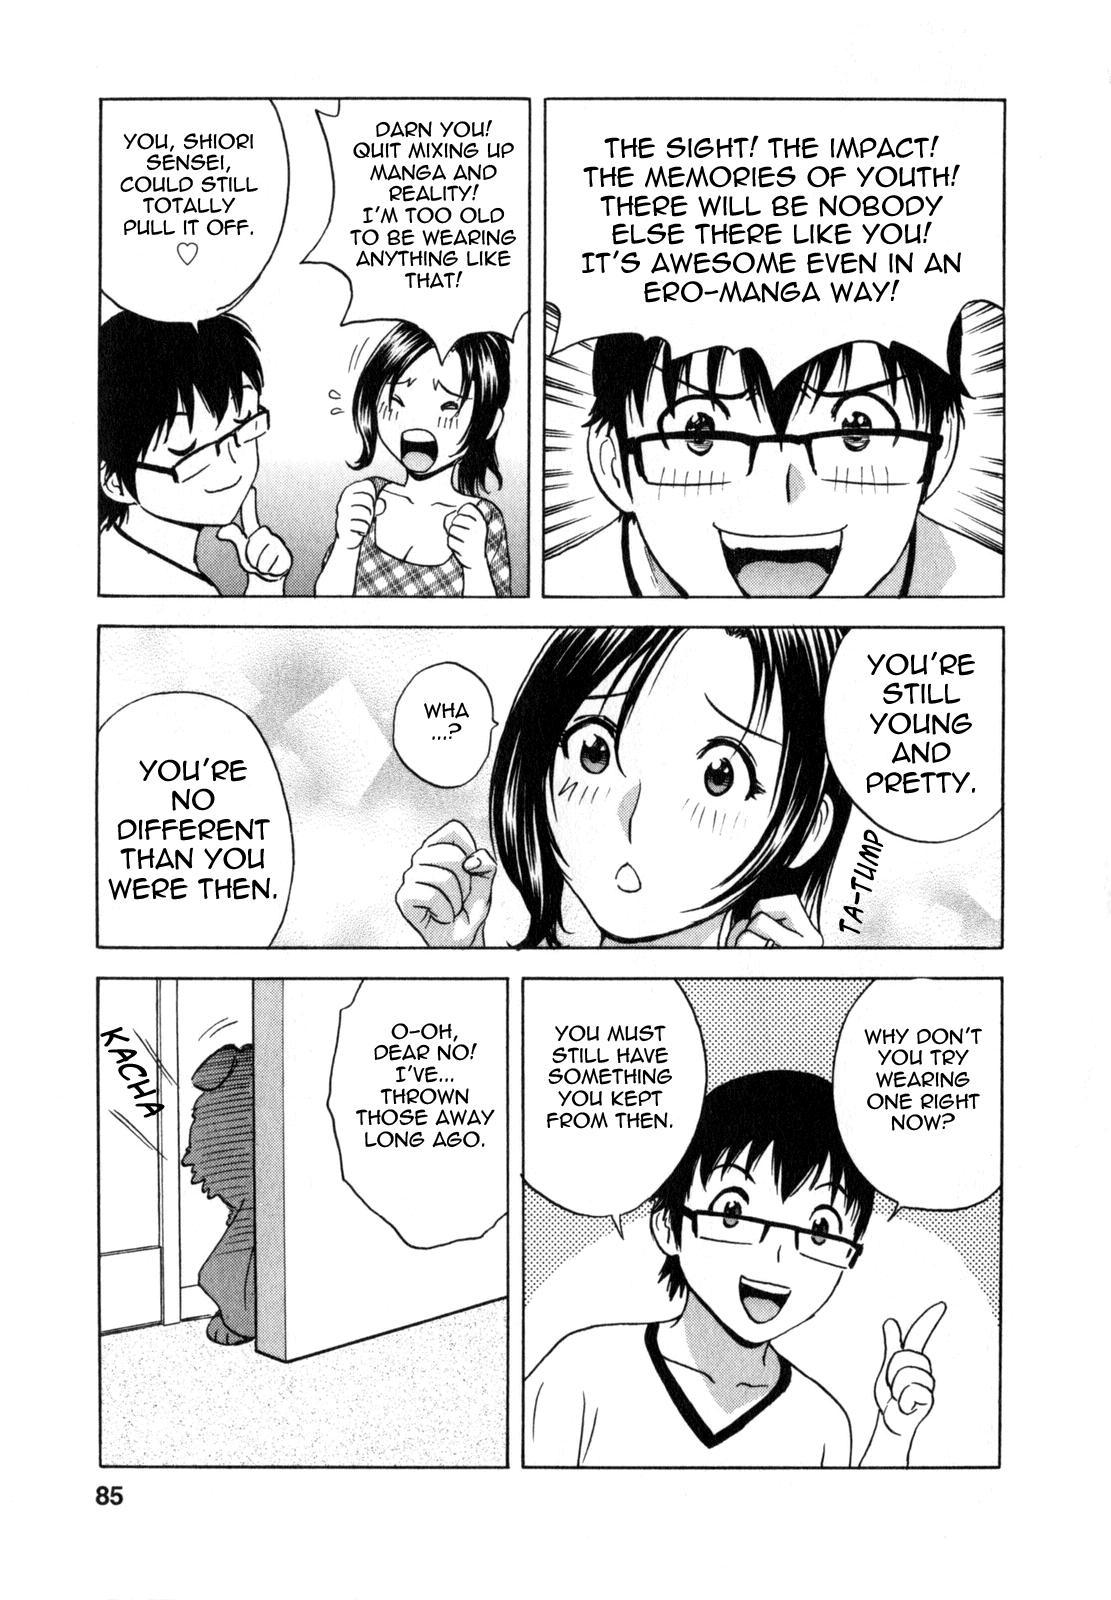 Life with Married Women Just Like a Manga 1 85